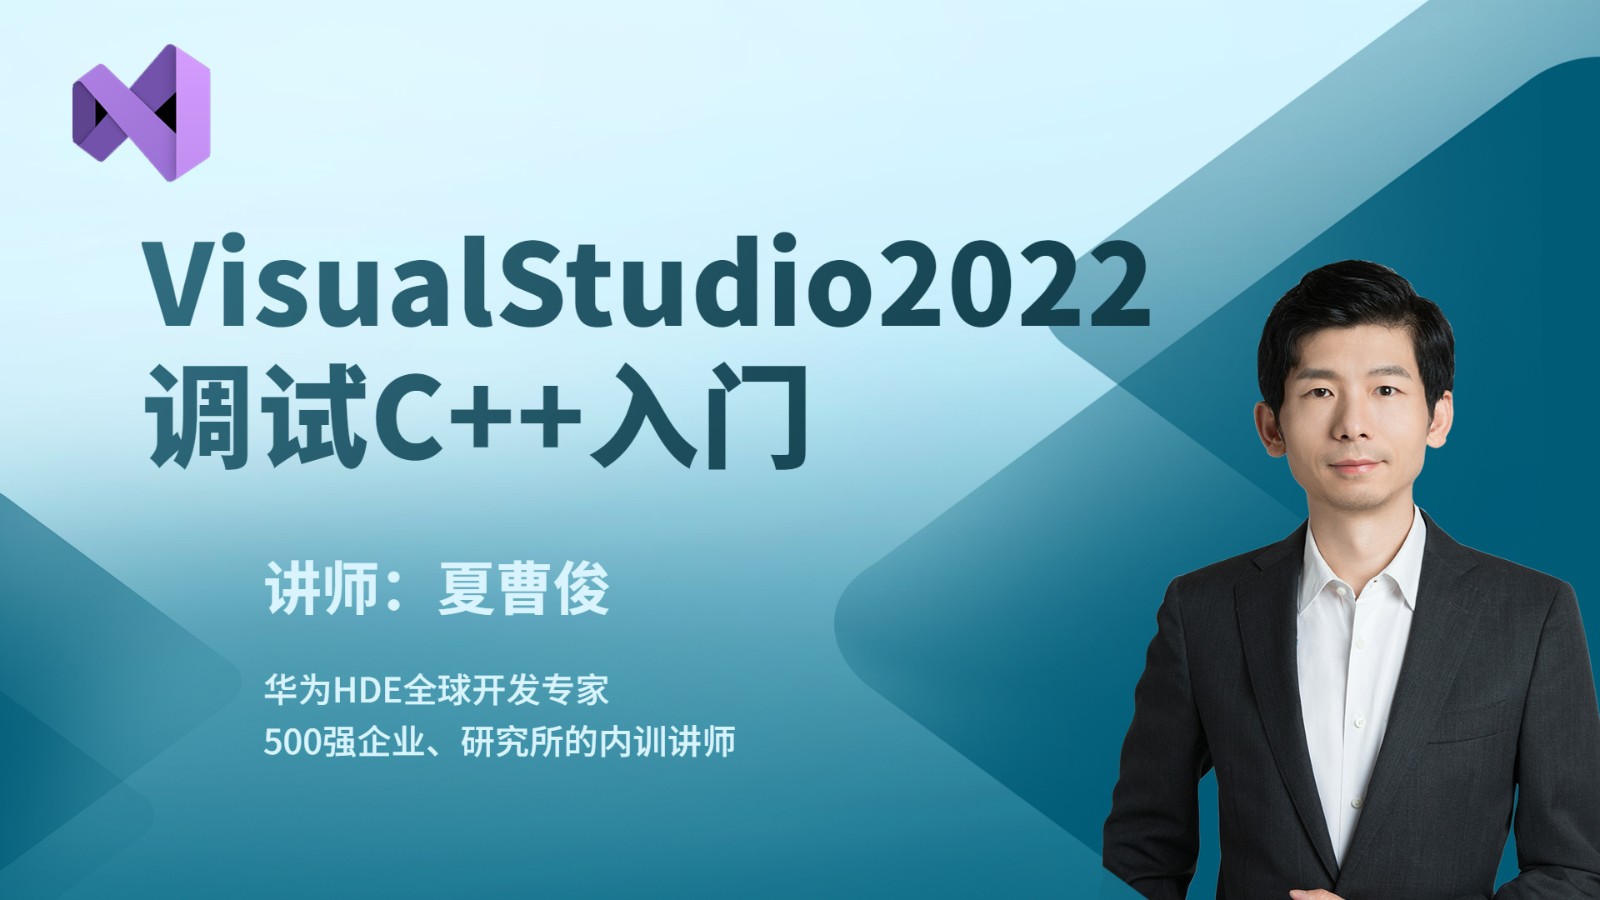 VisualStudio2022构建调试C++项目